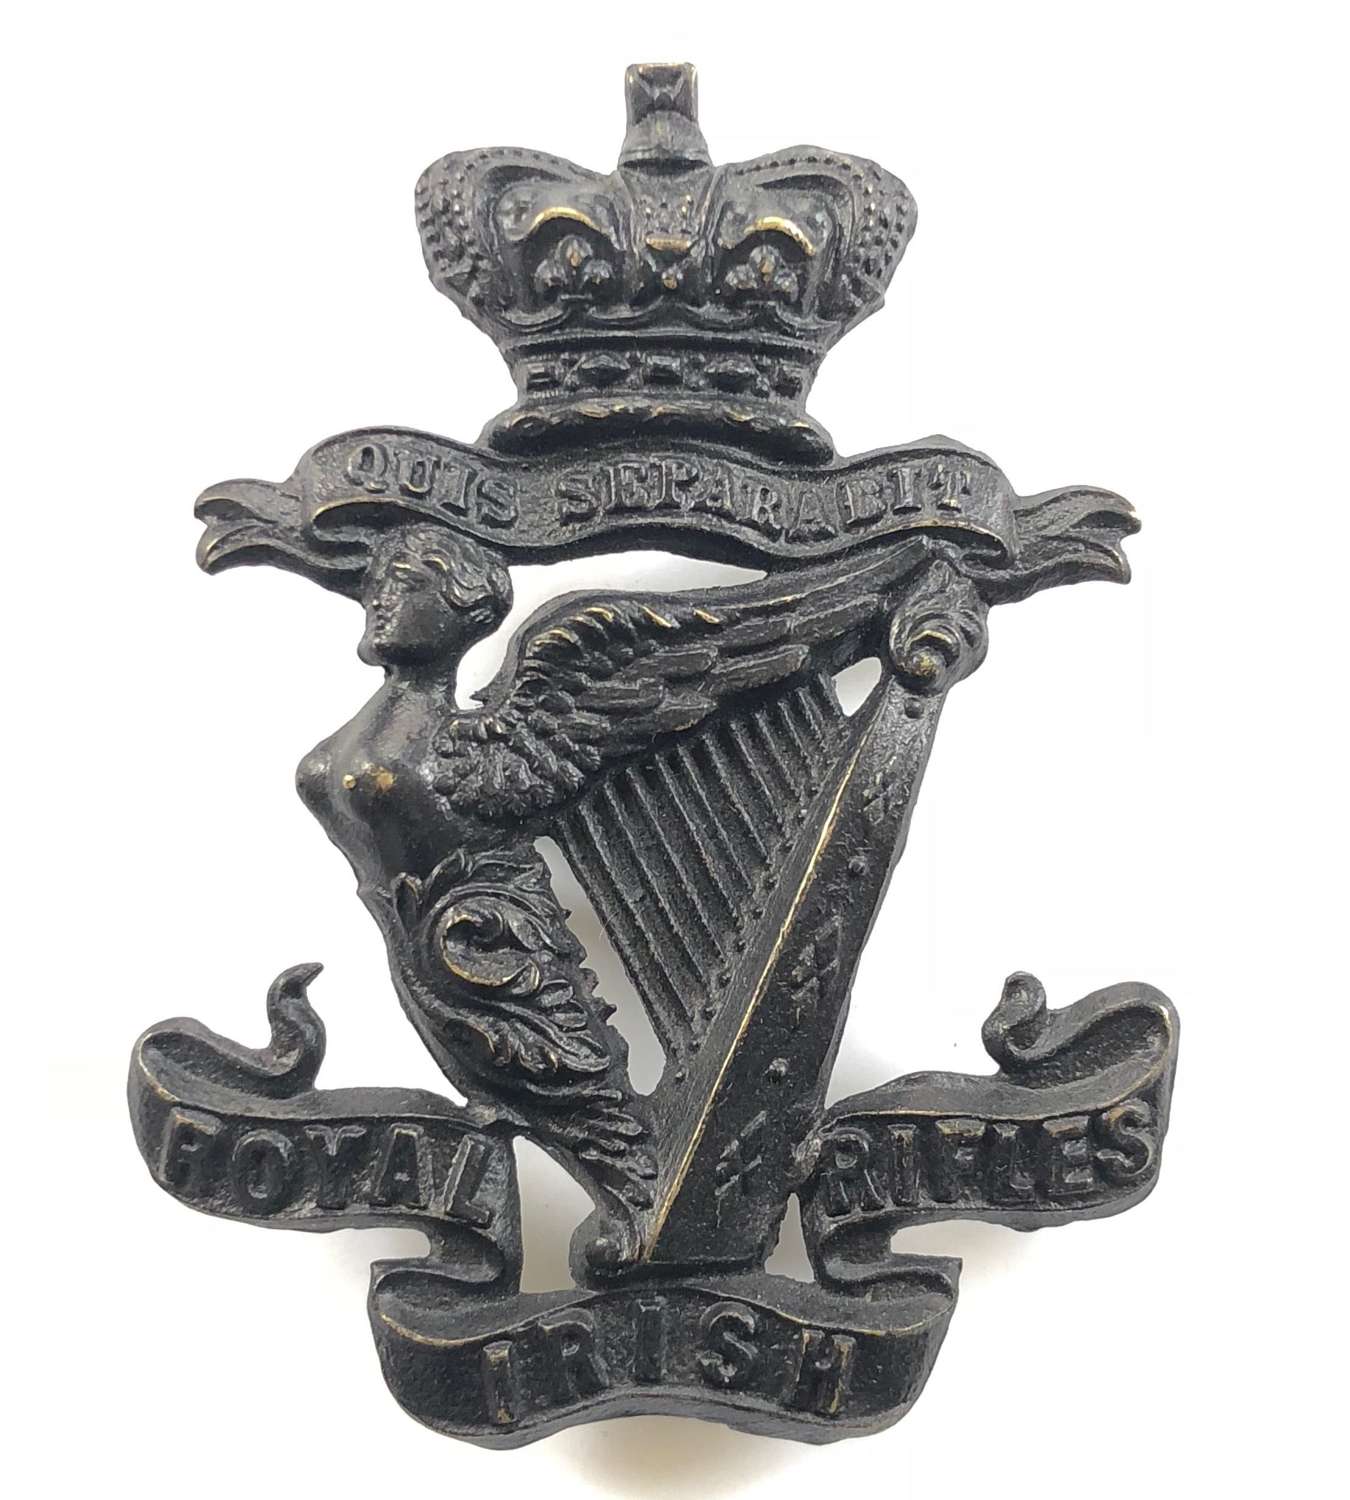 Royal Irish Rifles Victorian OR’s glengarry badge circa 1881-96